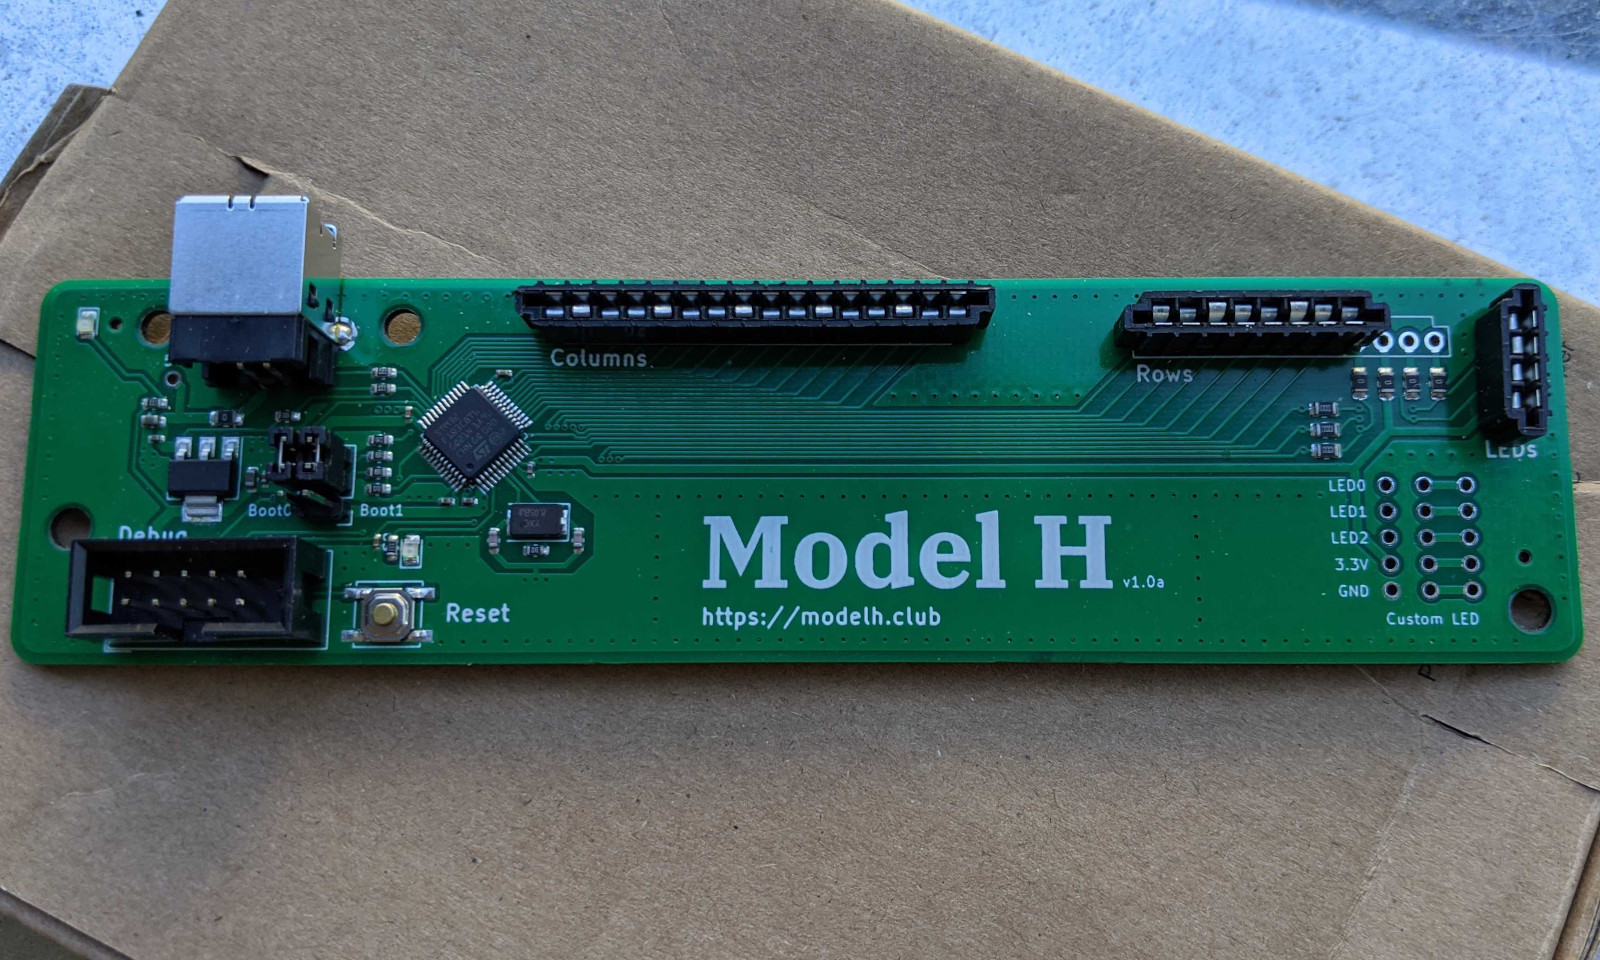 Model H controller